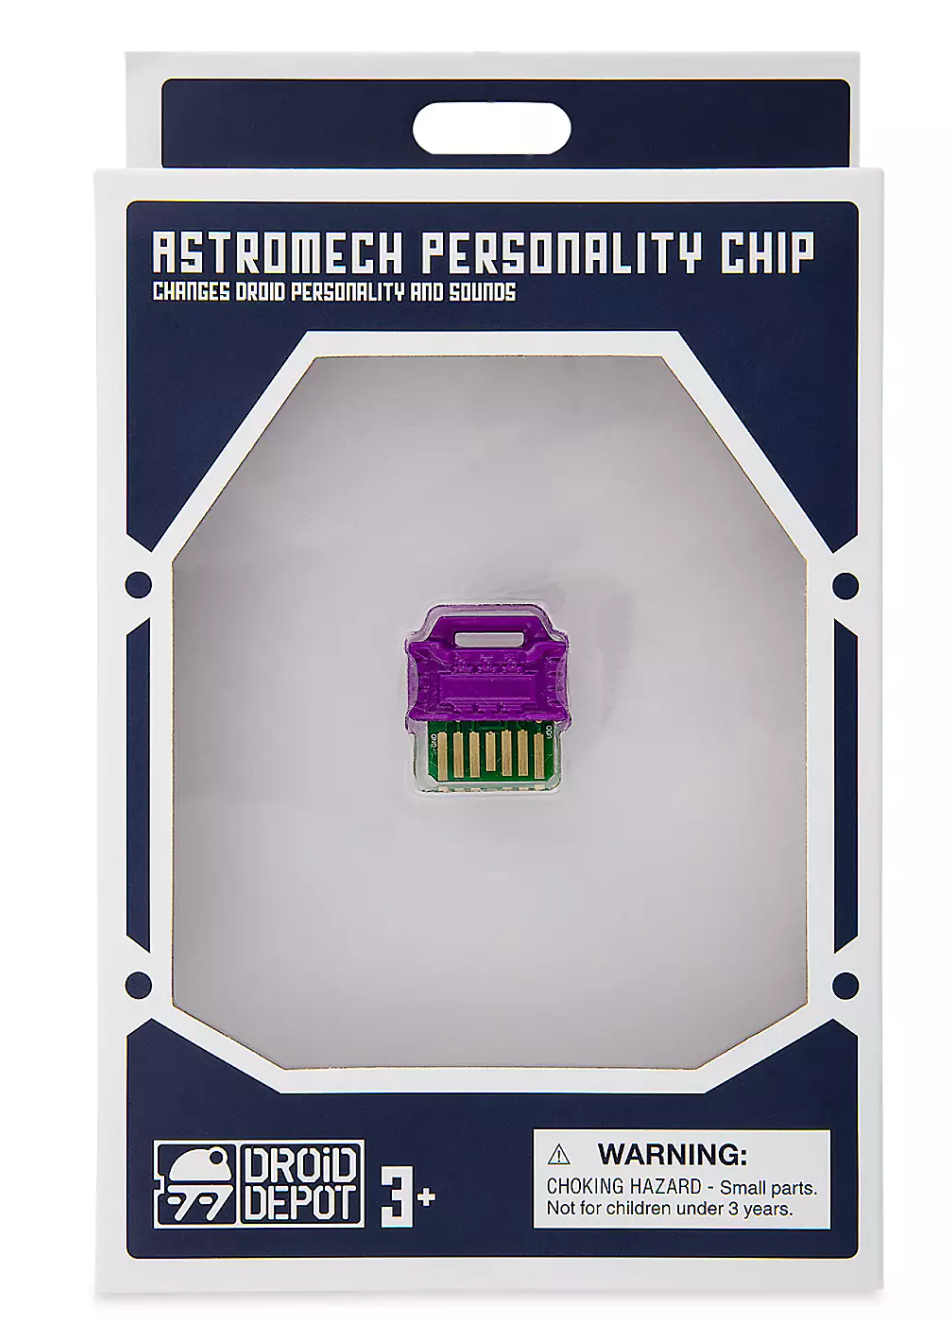 Disney Star Wars Galaxy's Purple Droid Depot Astromech Personality Chip New Box